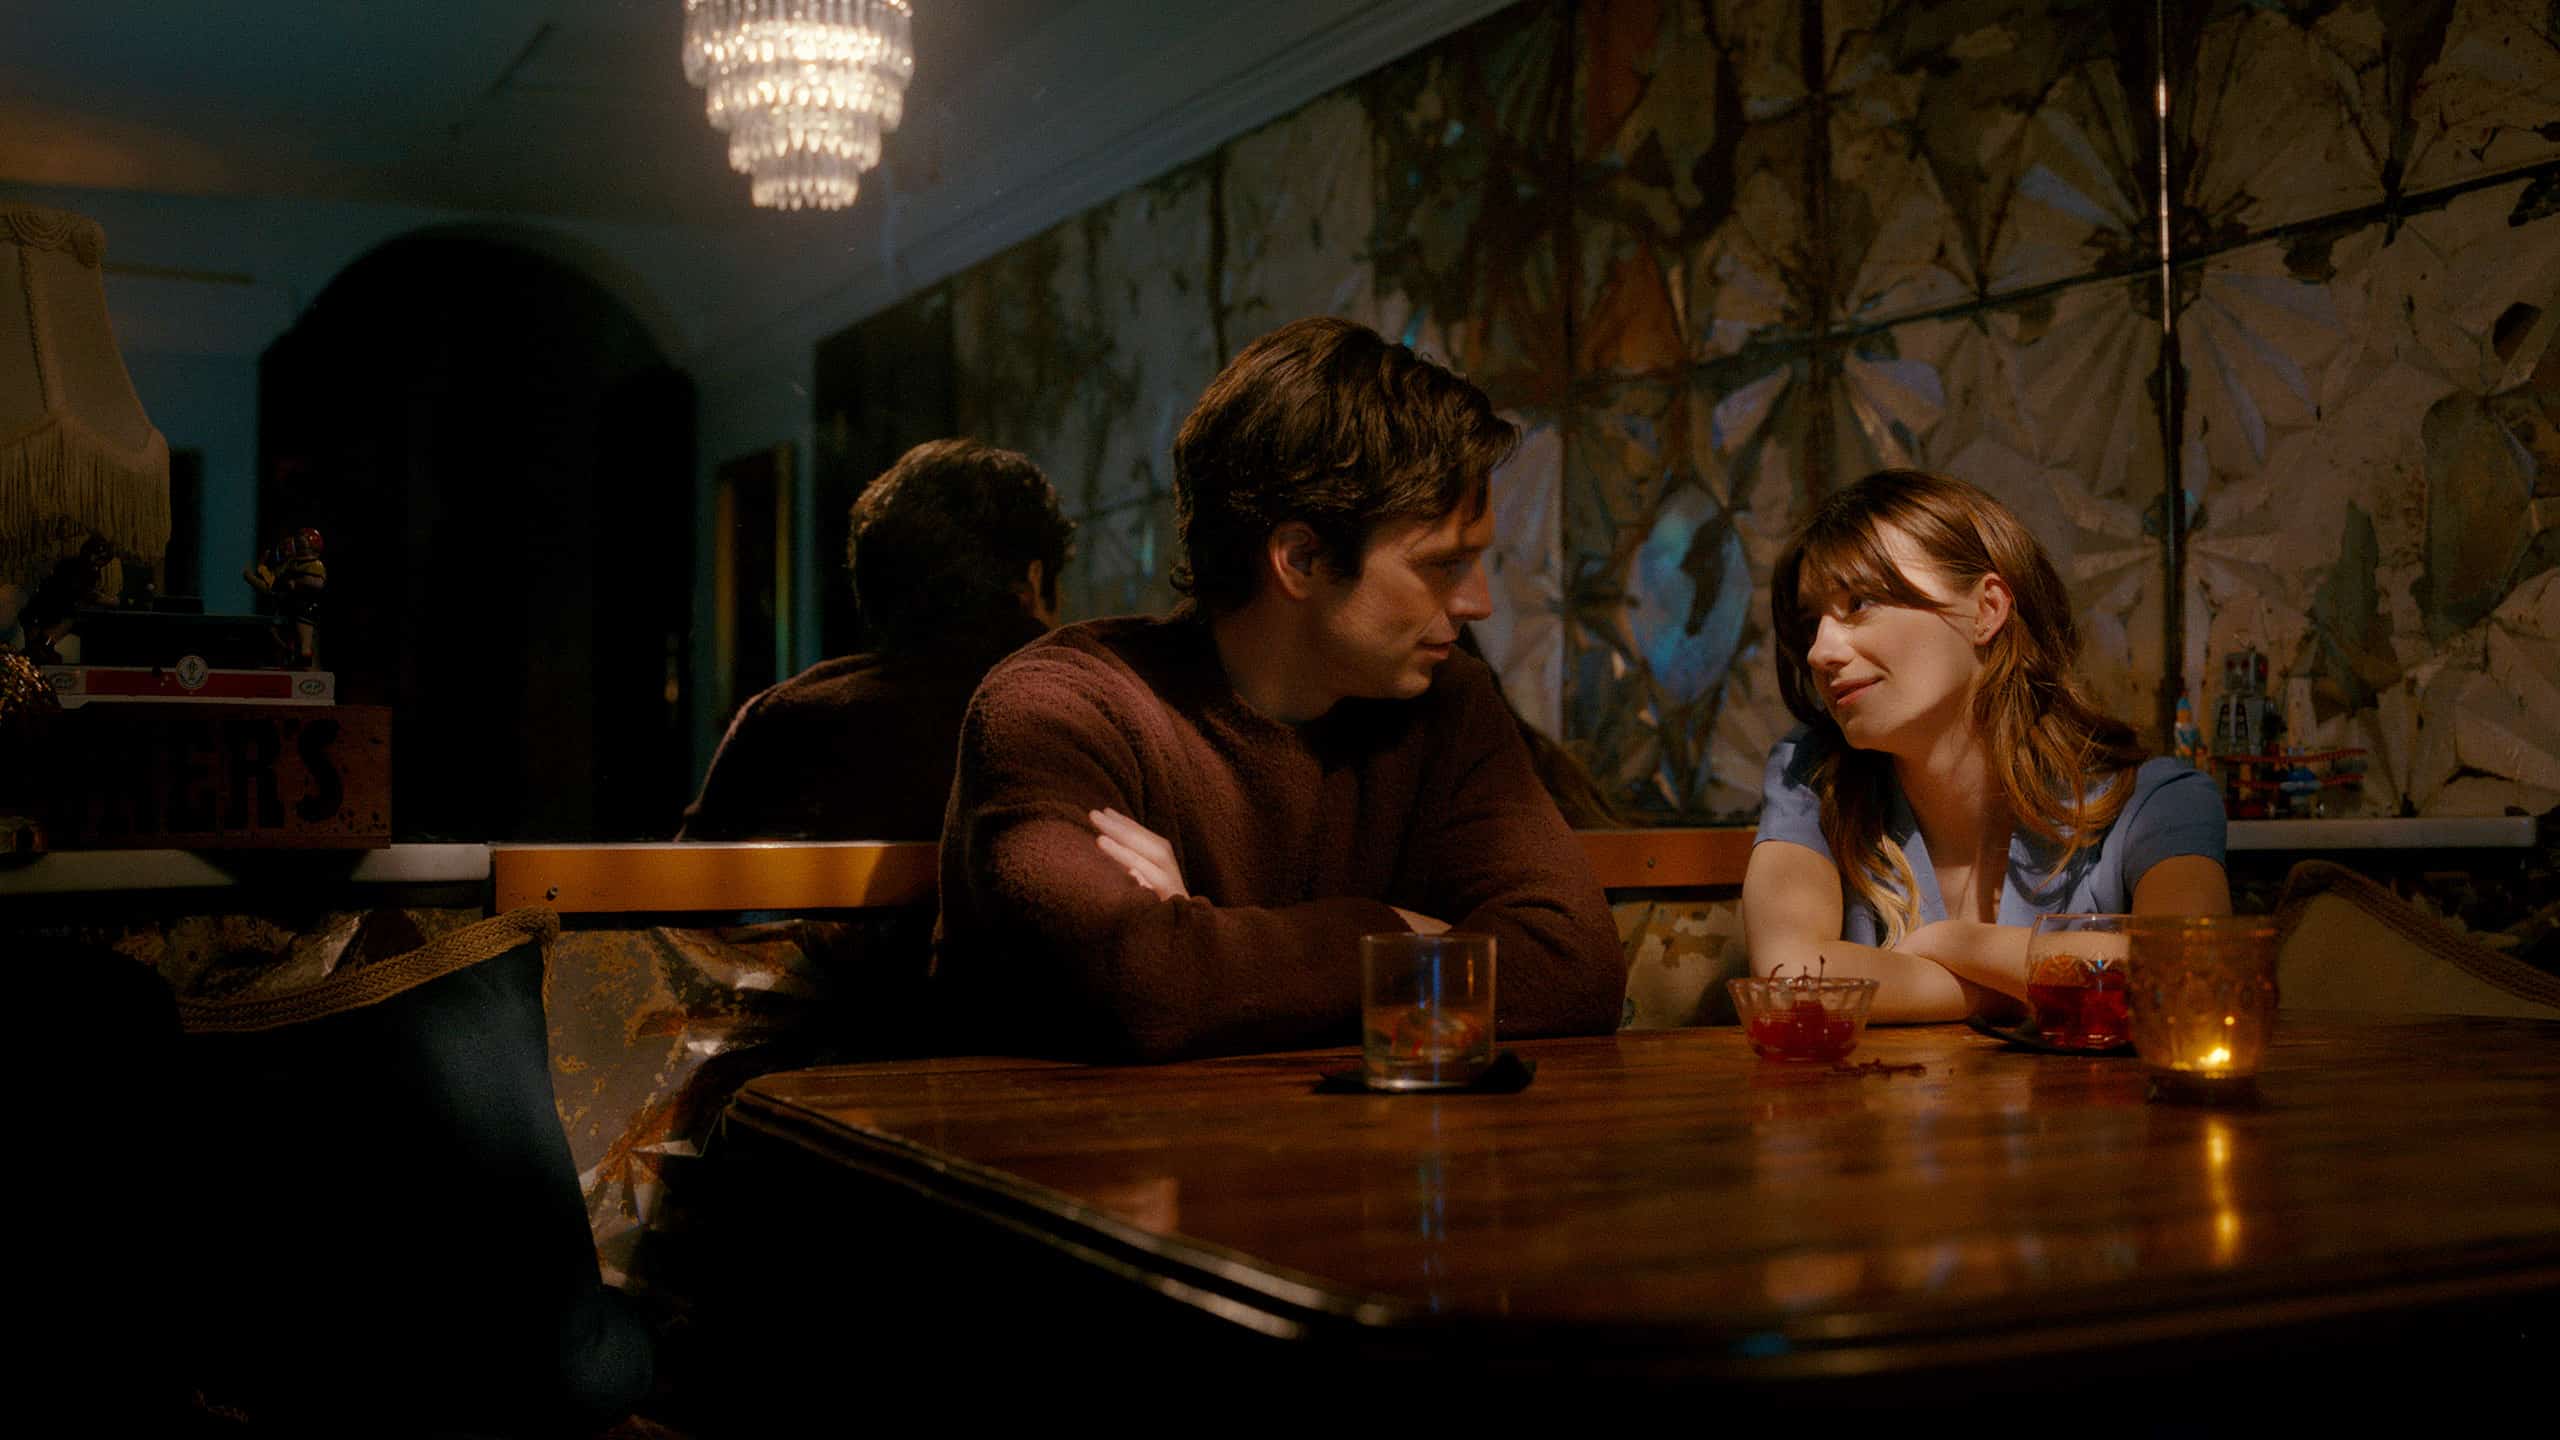 Steve (Sebastian Stan) and Noa (Daisy Edgar-Jones) on a date